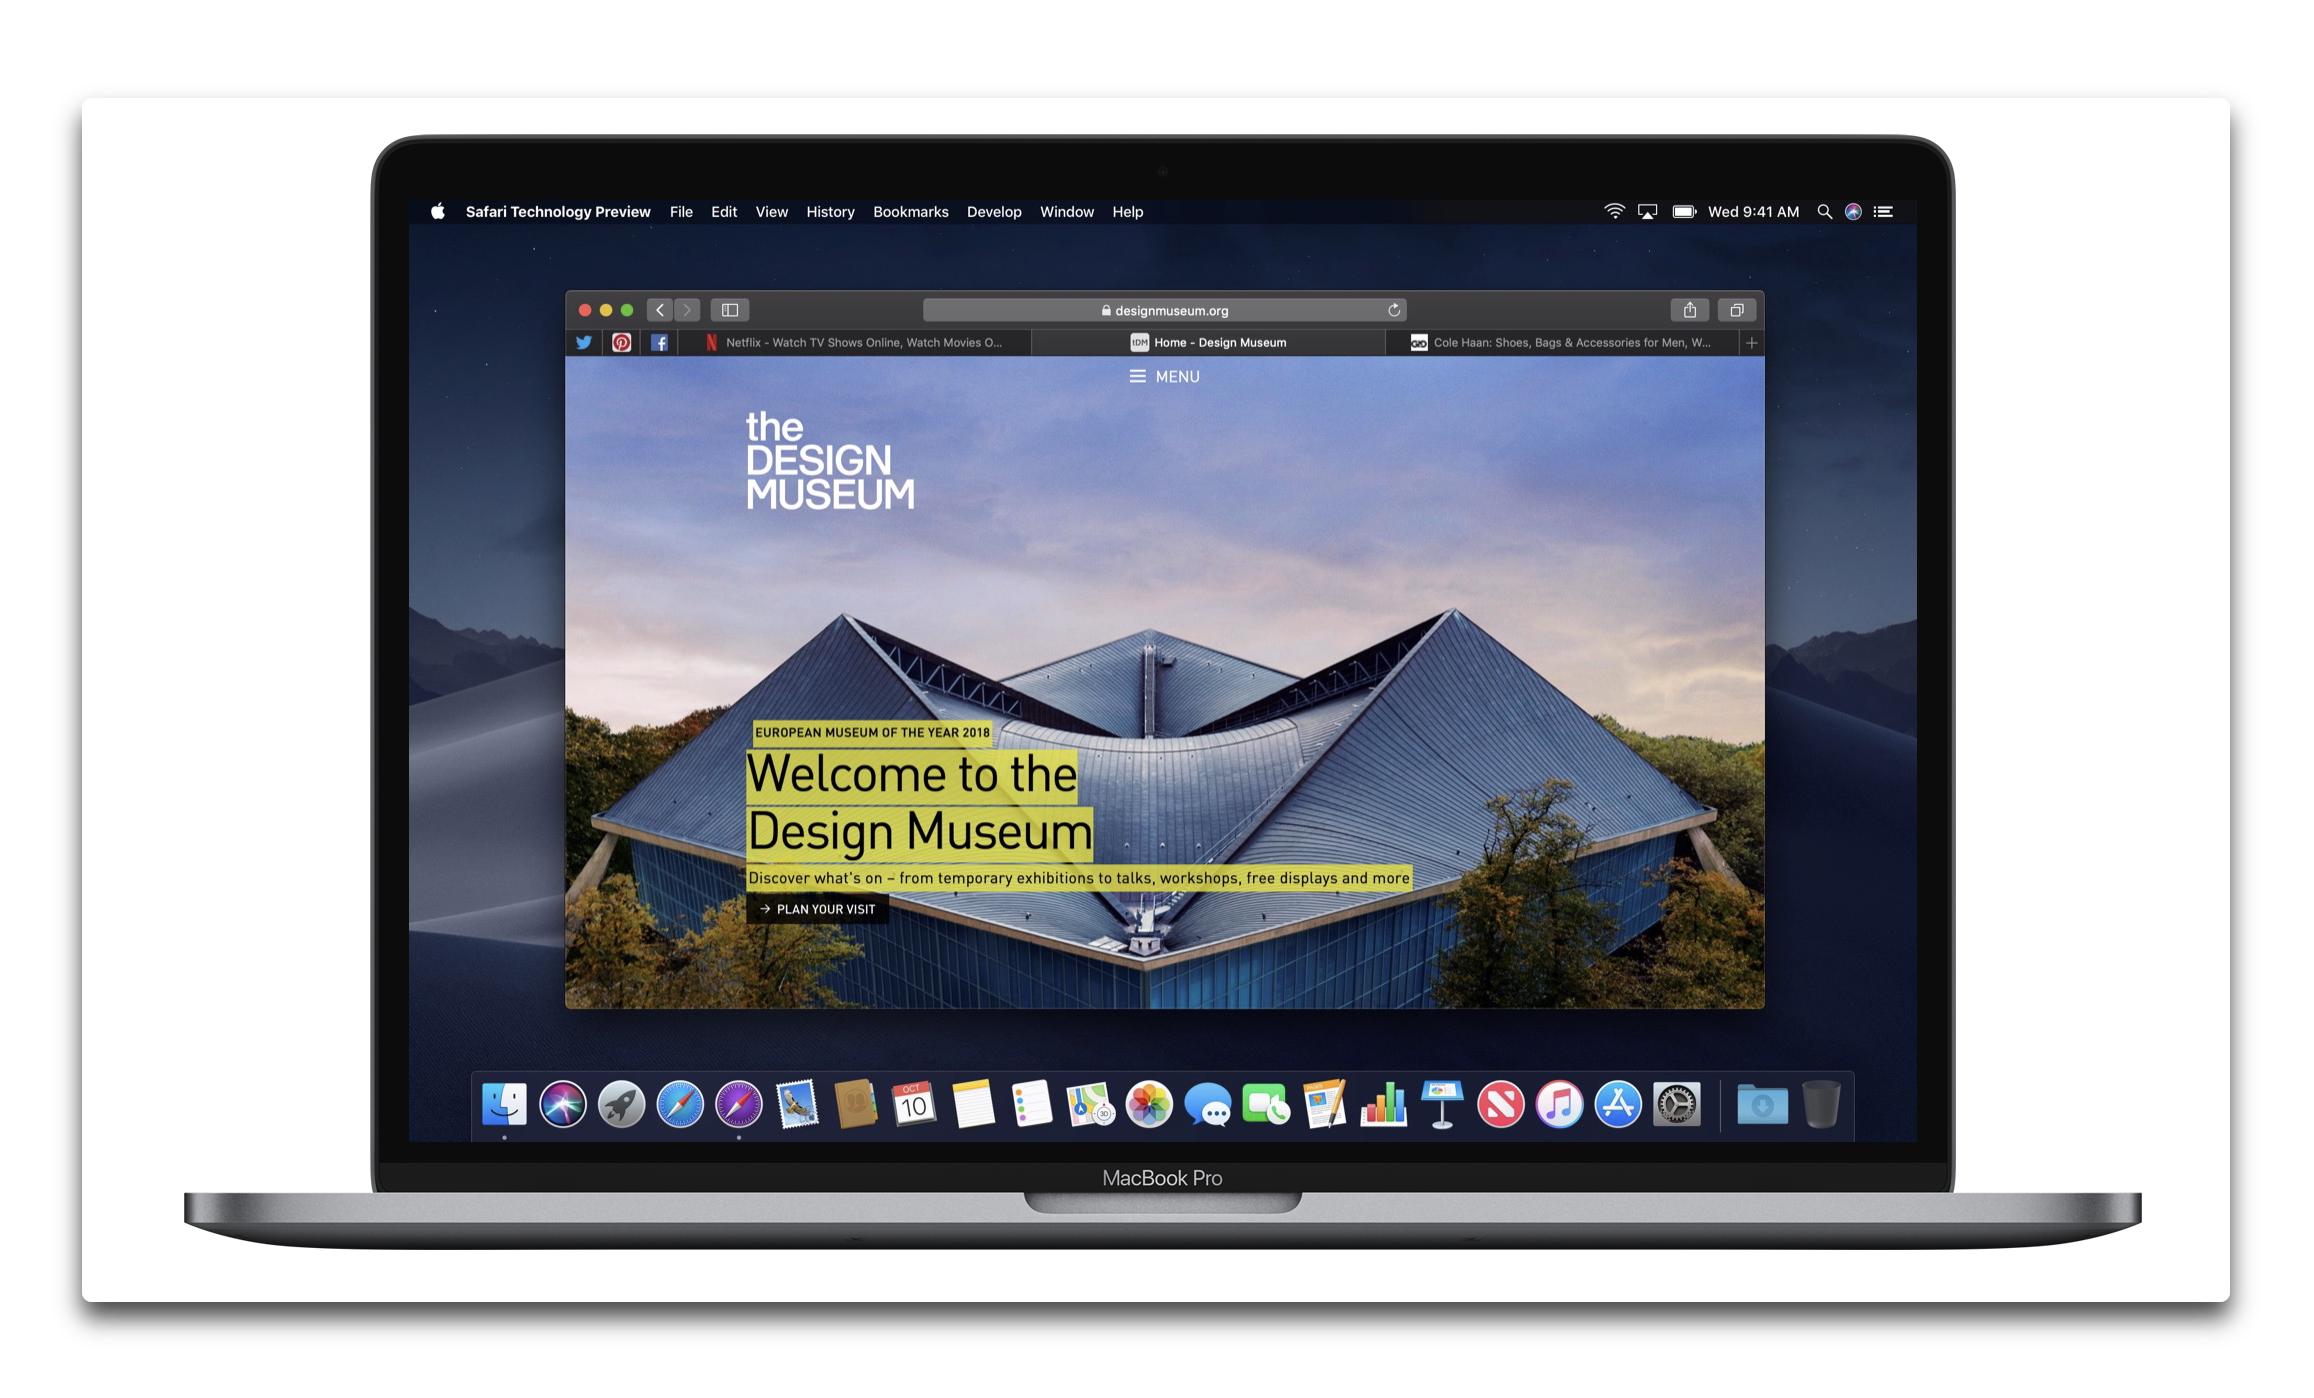 【Mac】Apple，「Safari Technology Preview Release 69」を開発者にリリース